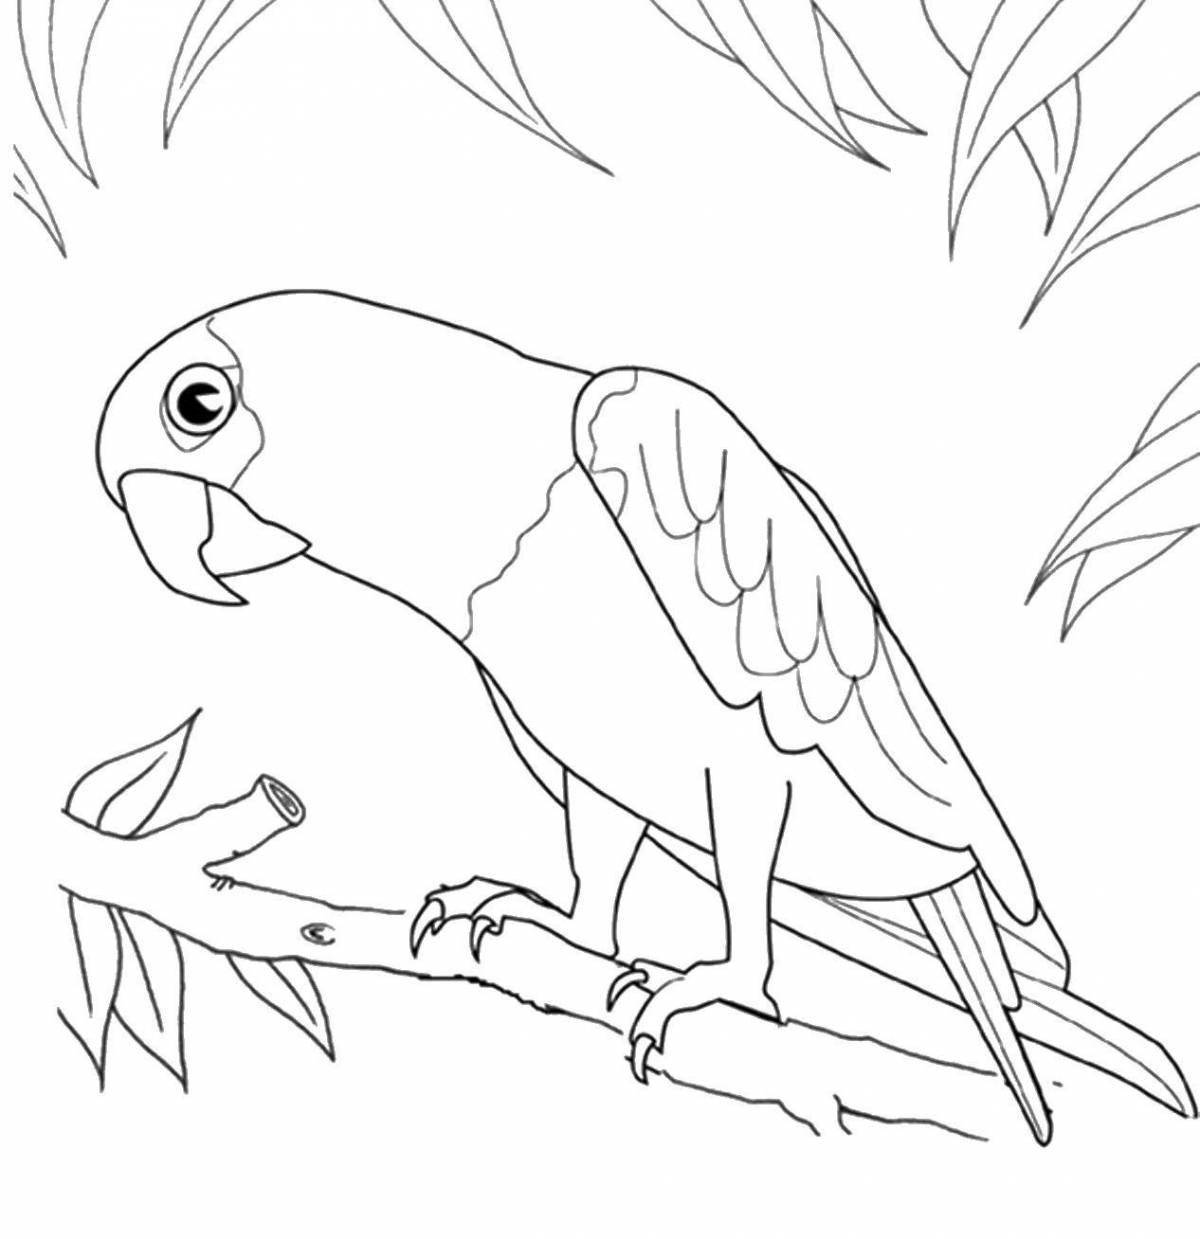 Violent macaw coloring book